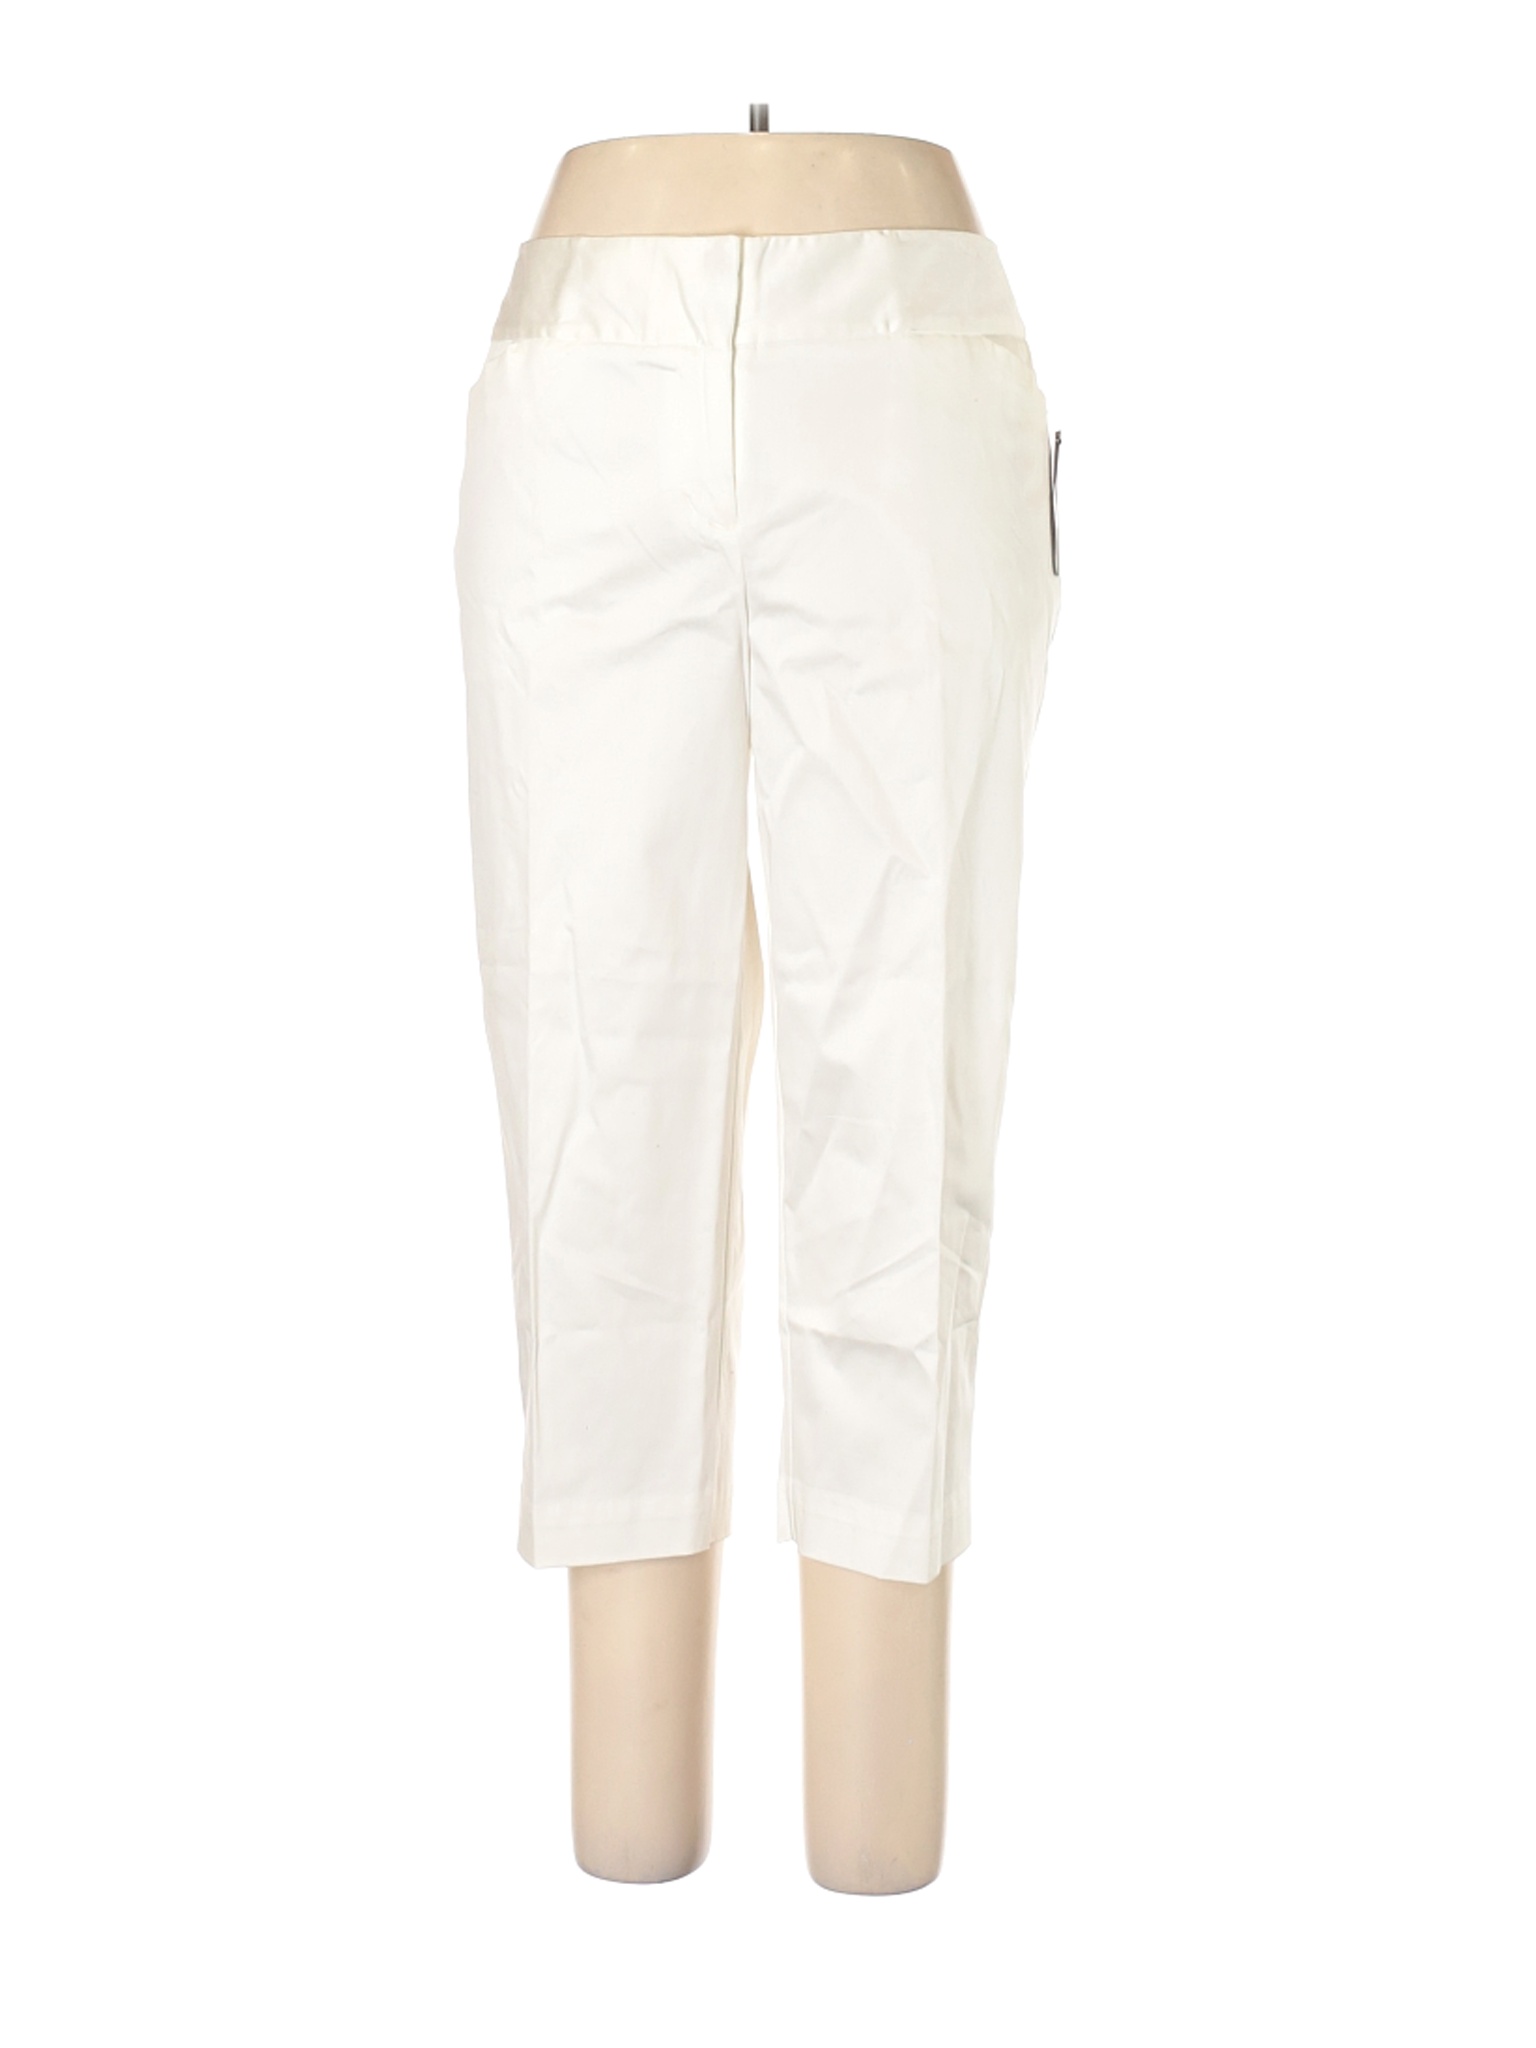 NWT Worthington Women White Dress Pants 14 | eBay